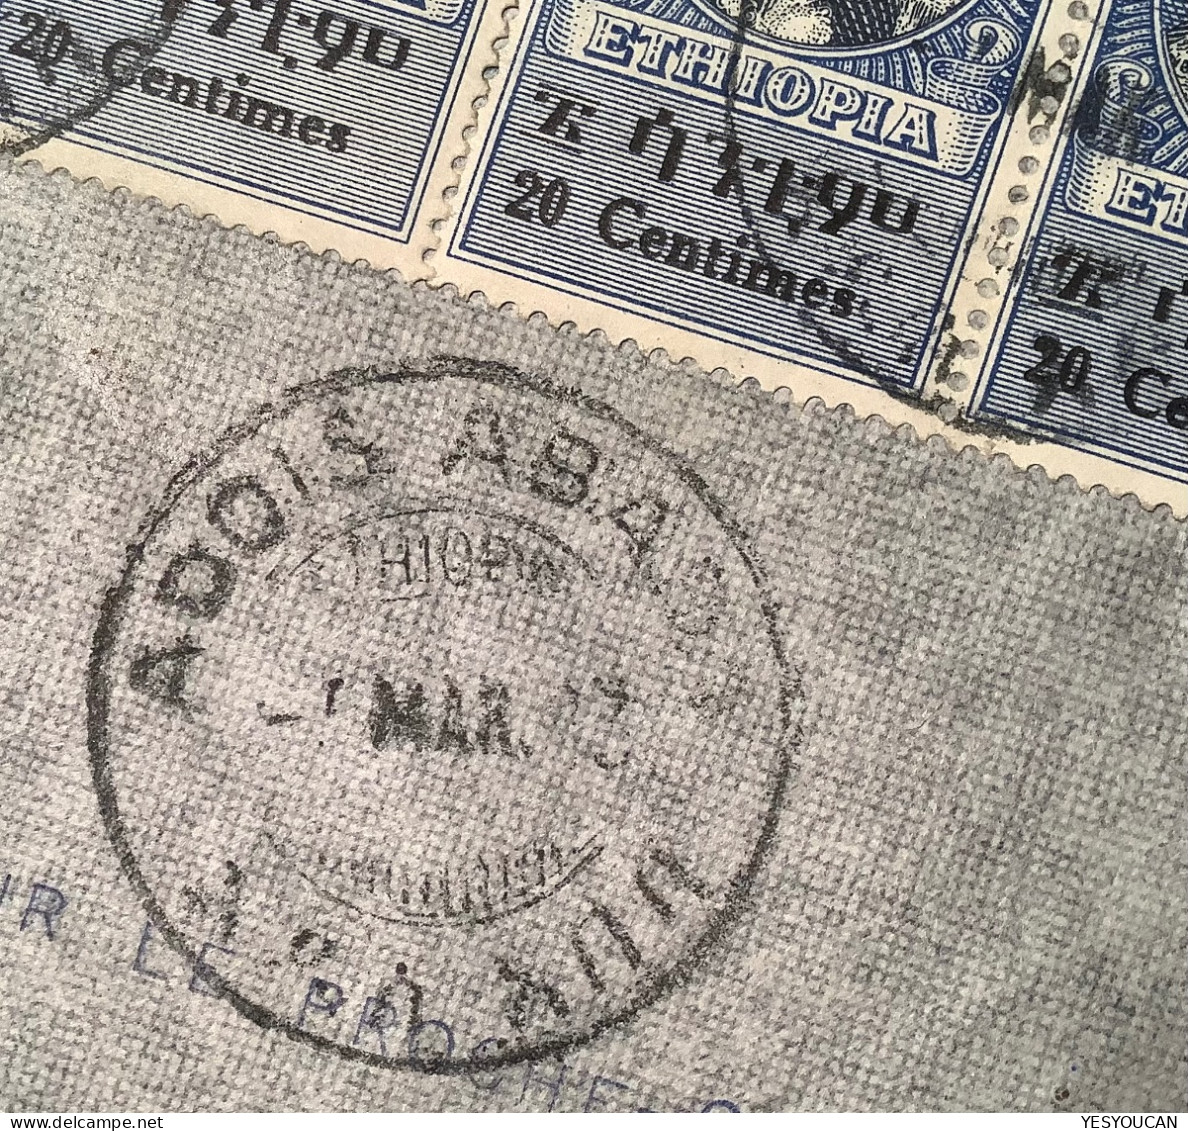 Ethiopia ADDIS ABABA 1943 Air Mail Cover>croix Rouge CICR Proche Orient, Egypt (lettre WW2 - Etiopía